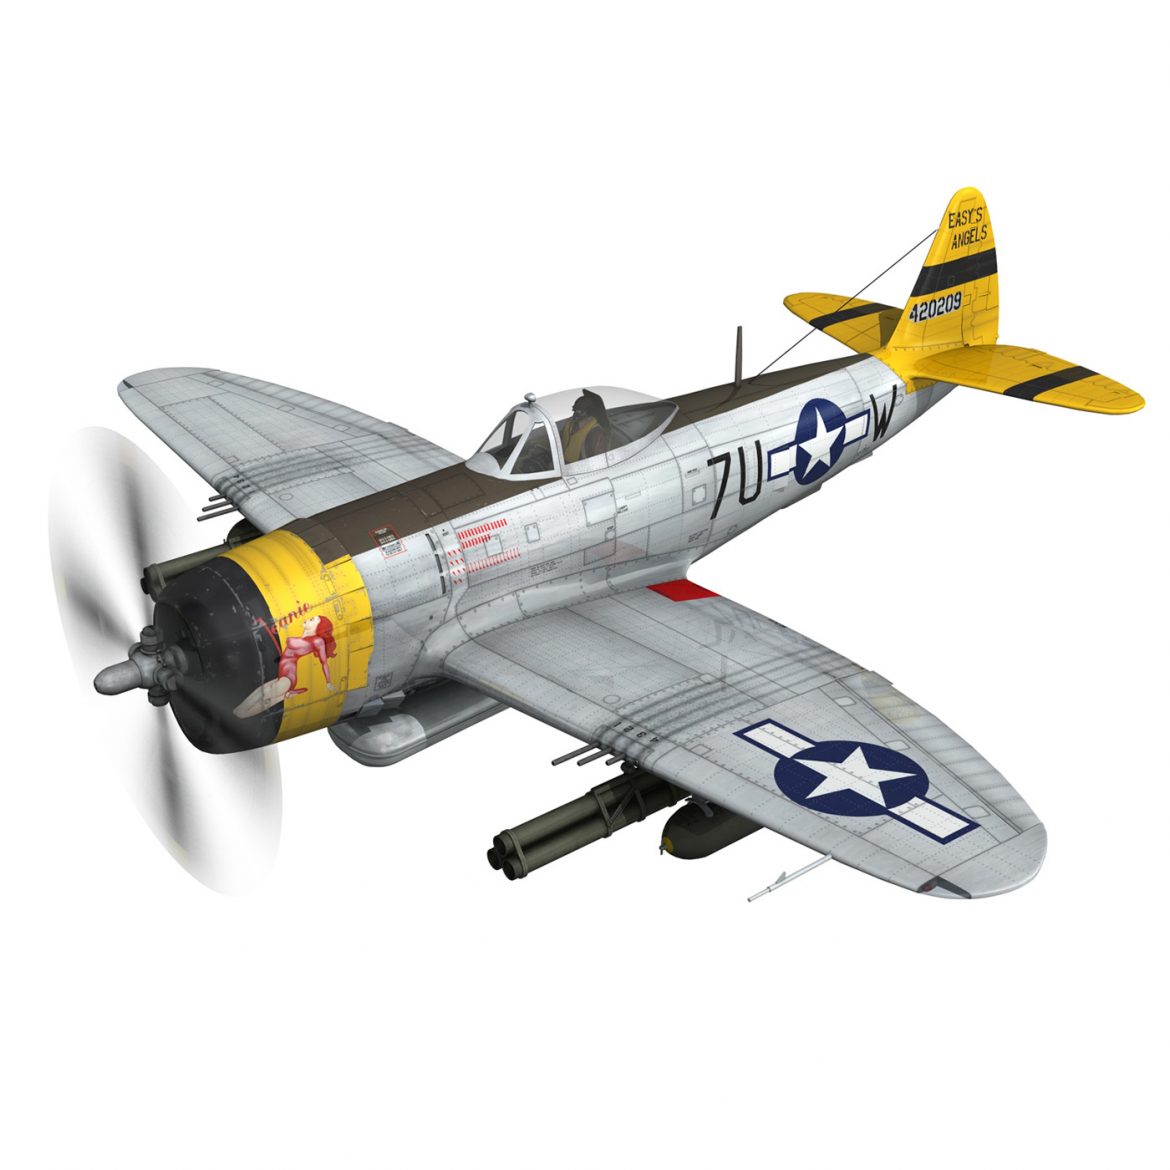 republic p-47d thunderbolt – eileen 3d model 3ds fbx c4d lwo obj 299936